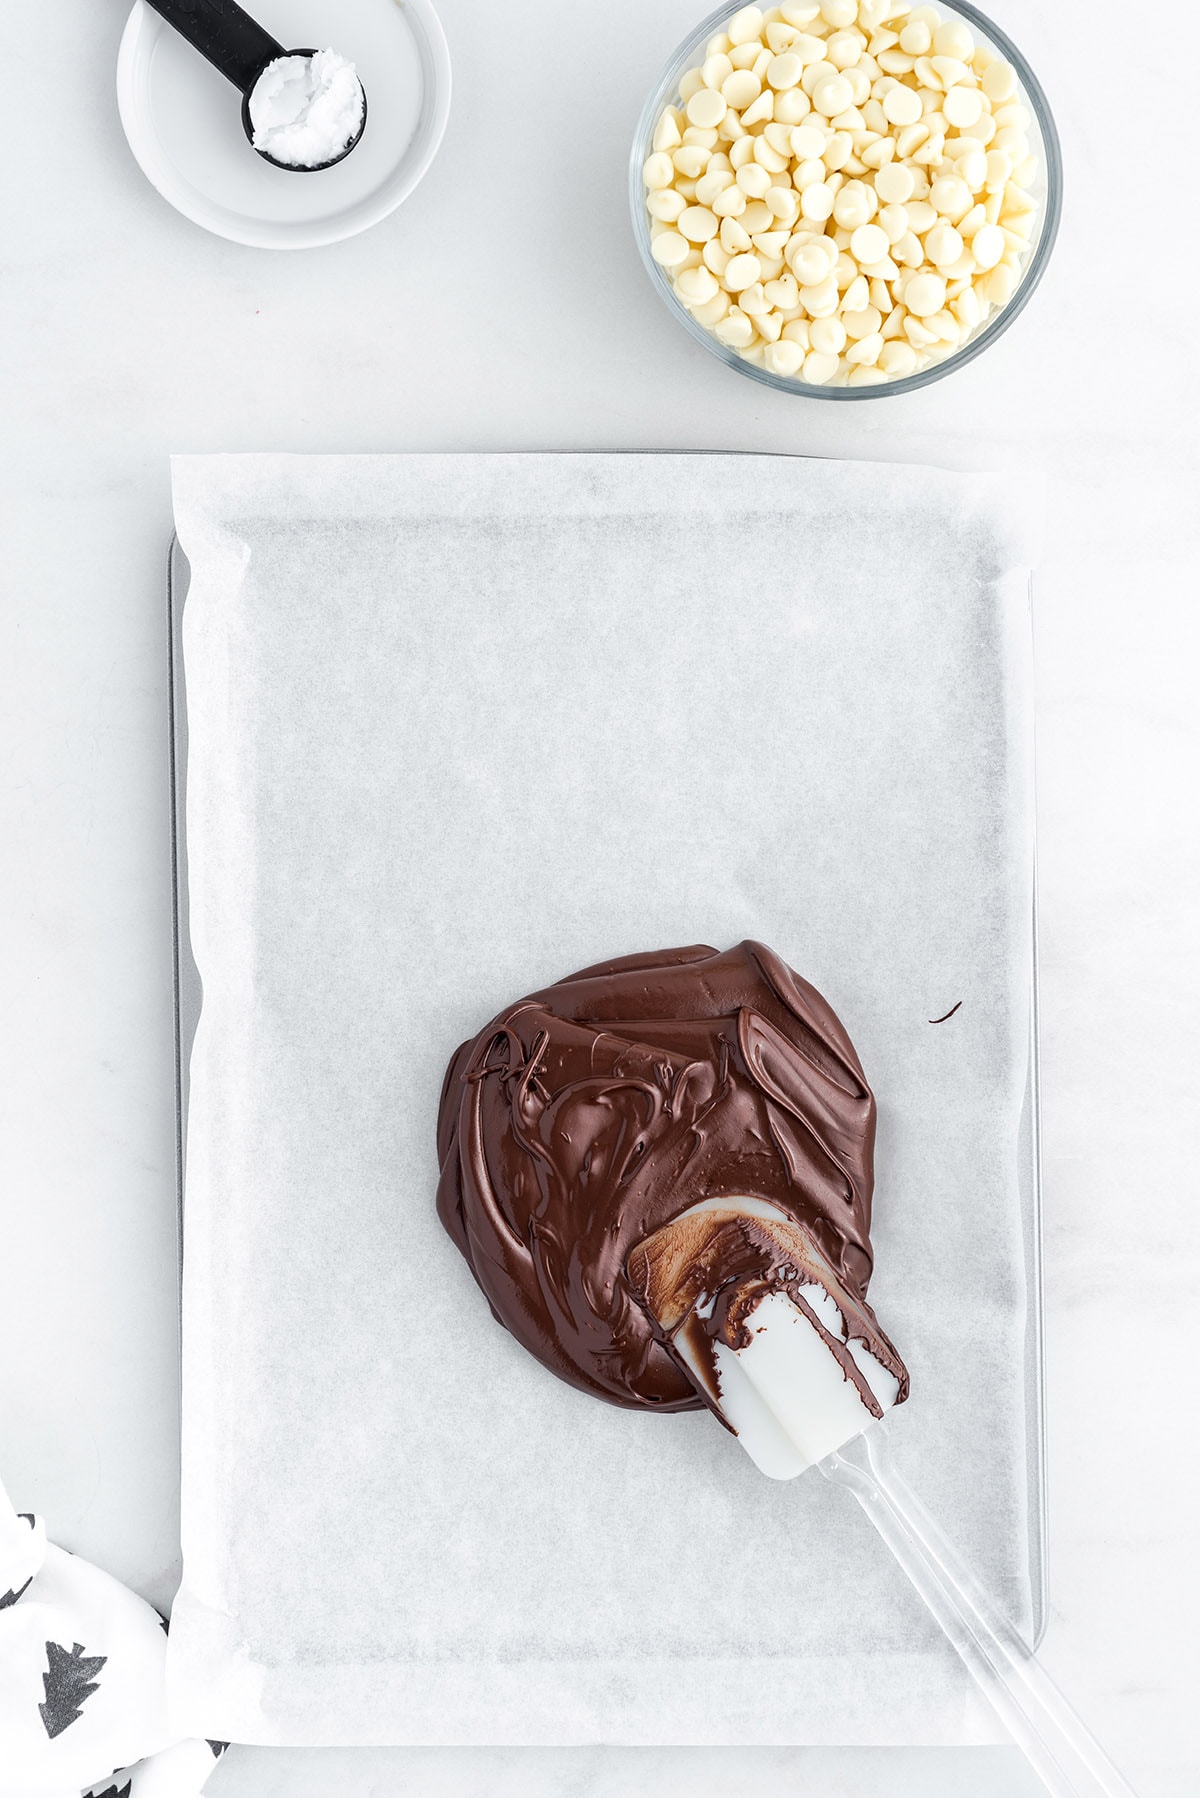 pour chocolate to baking sheet